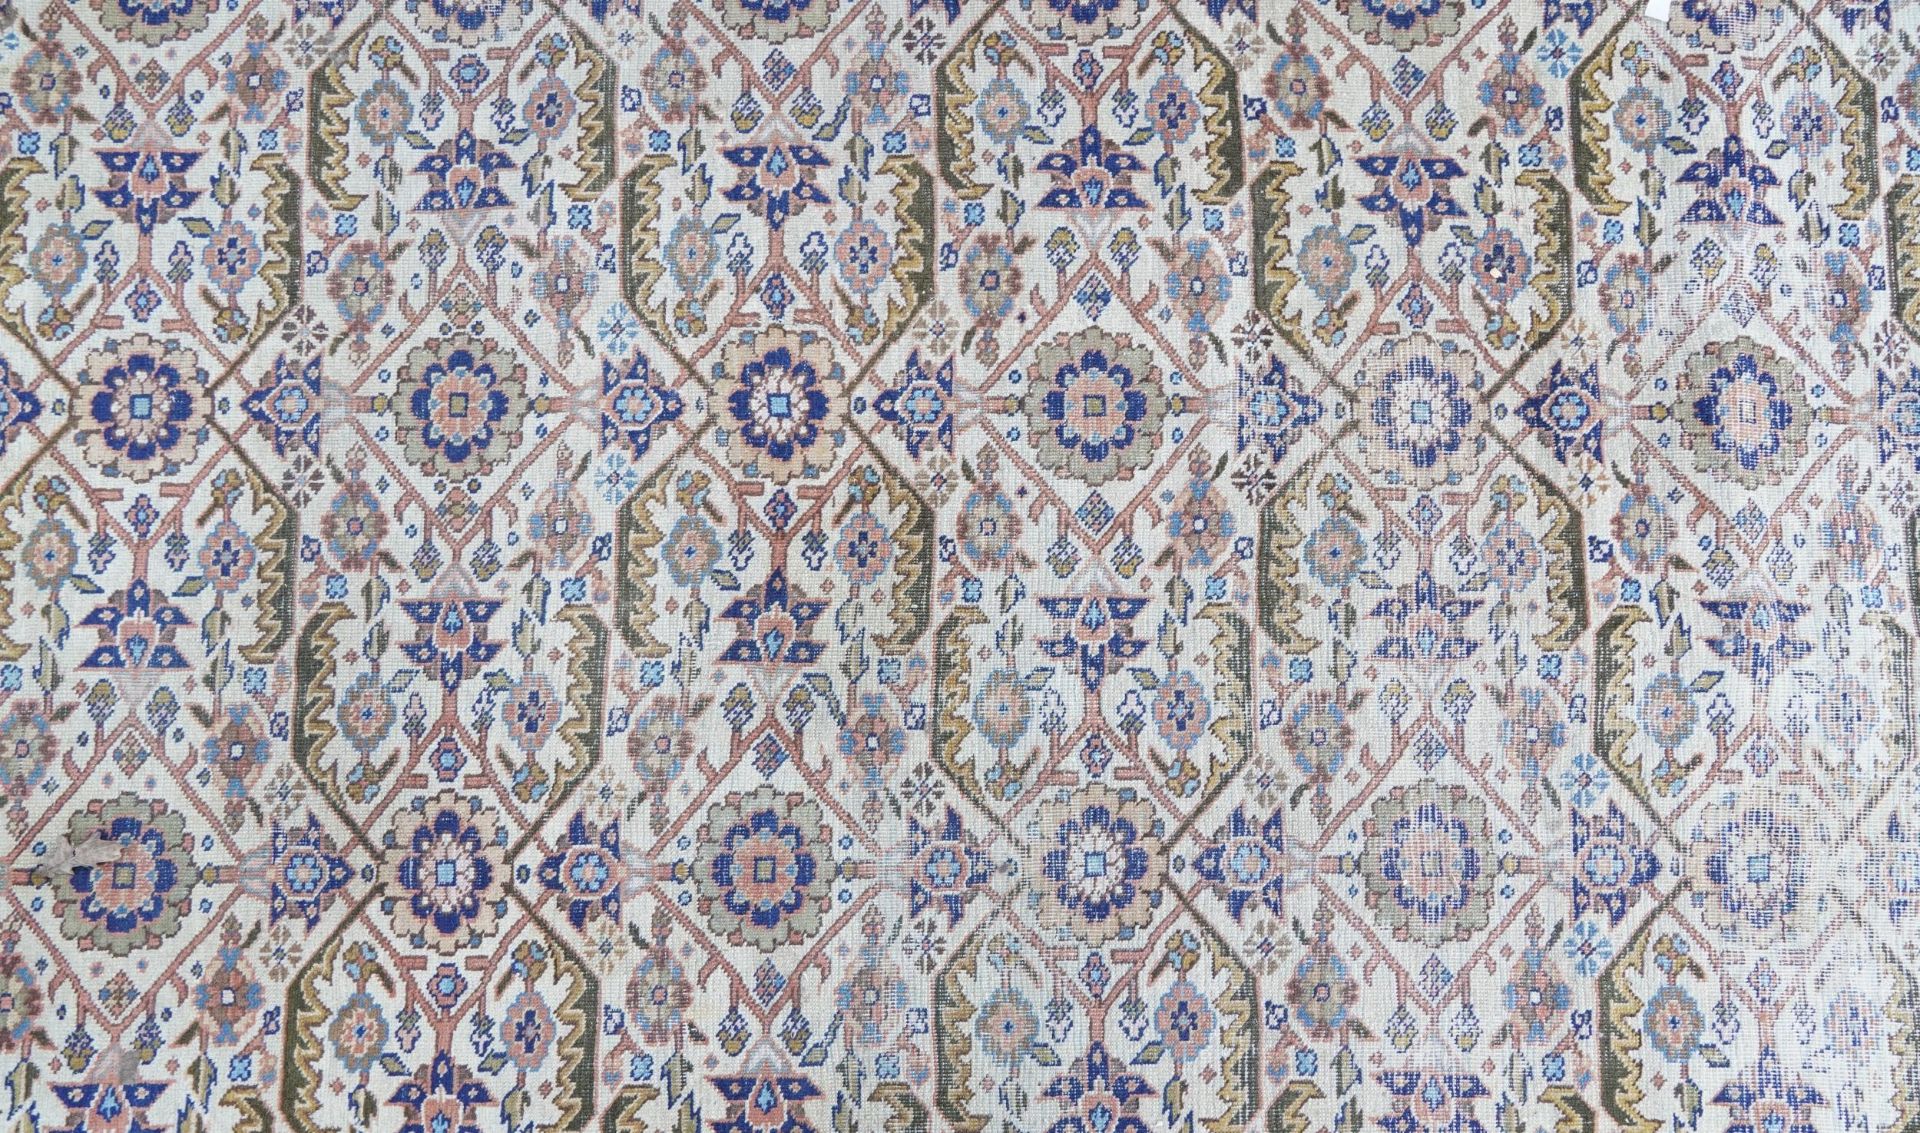 Rectangular Persian rug having an allover floral design within corresponding borders, 345cm x 255cm - Image 6 of 11